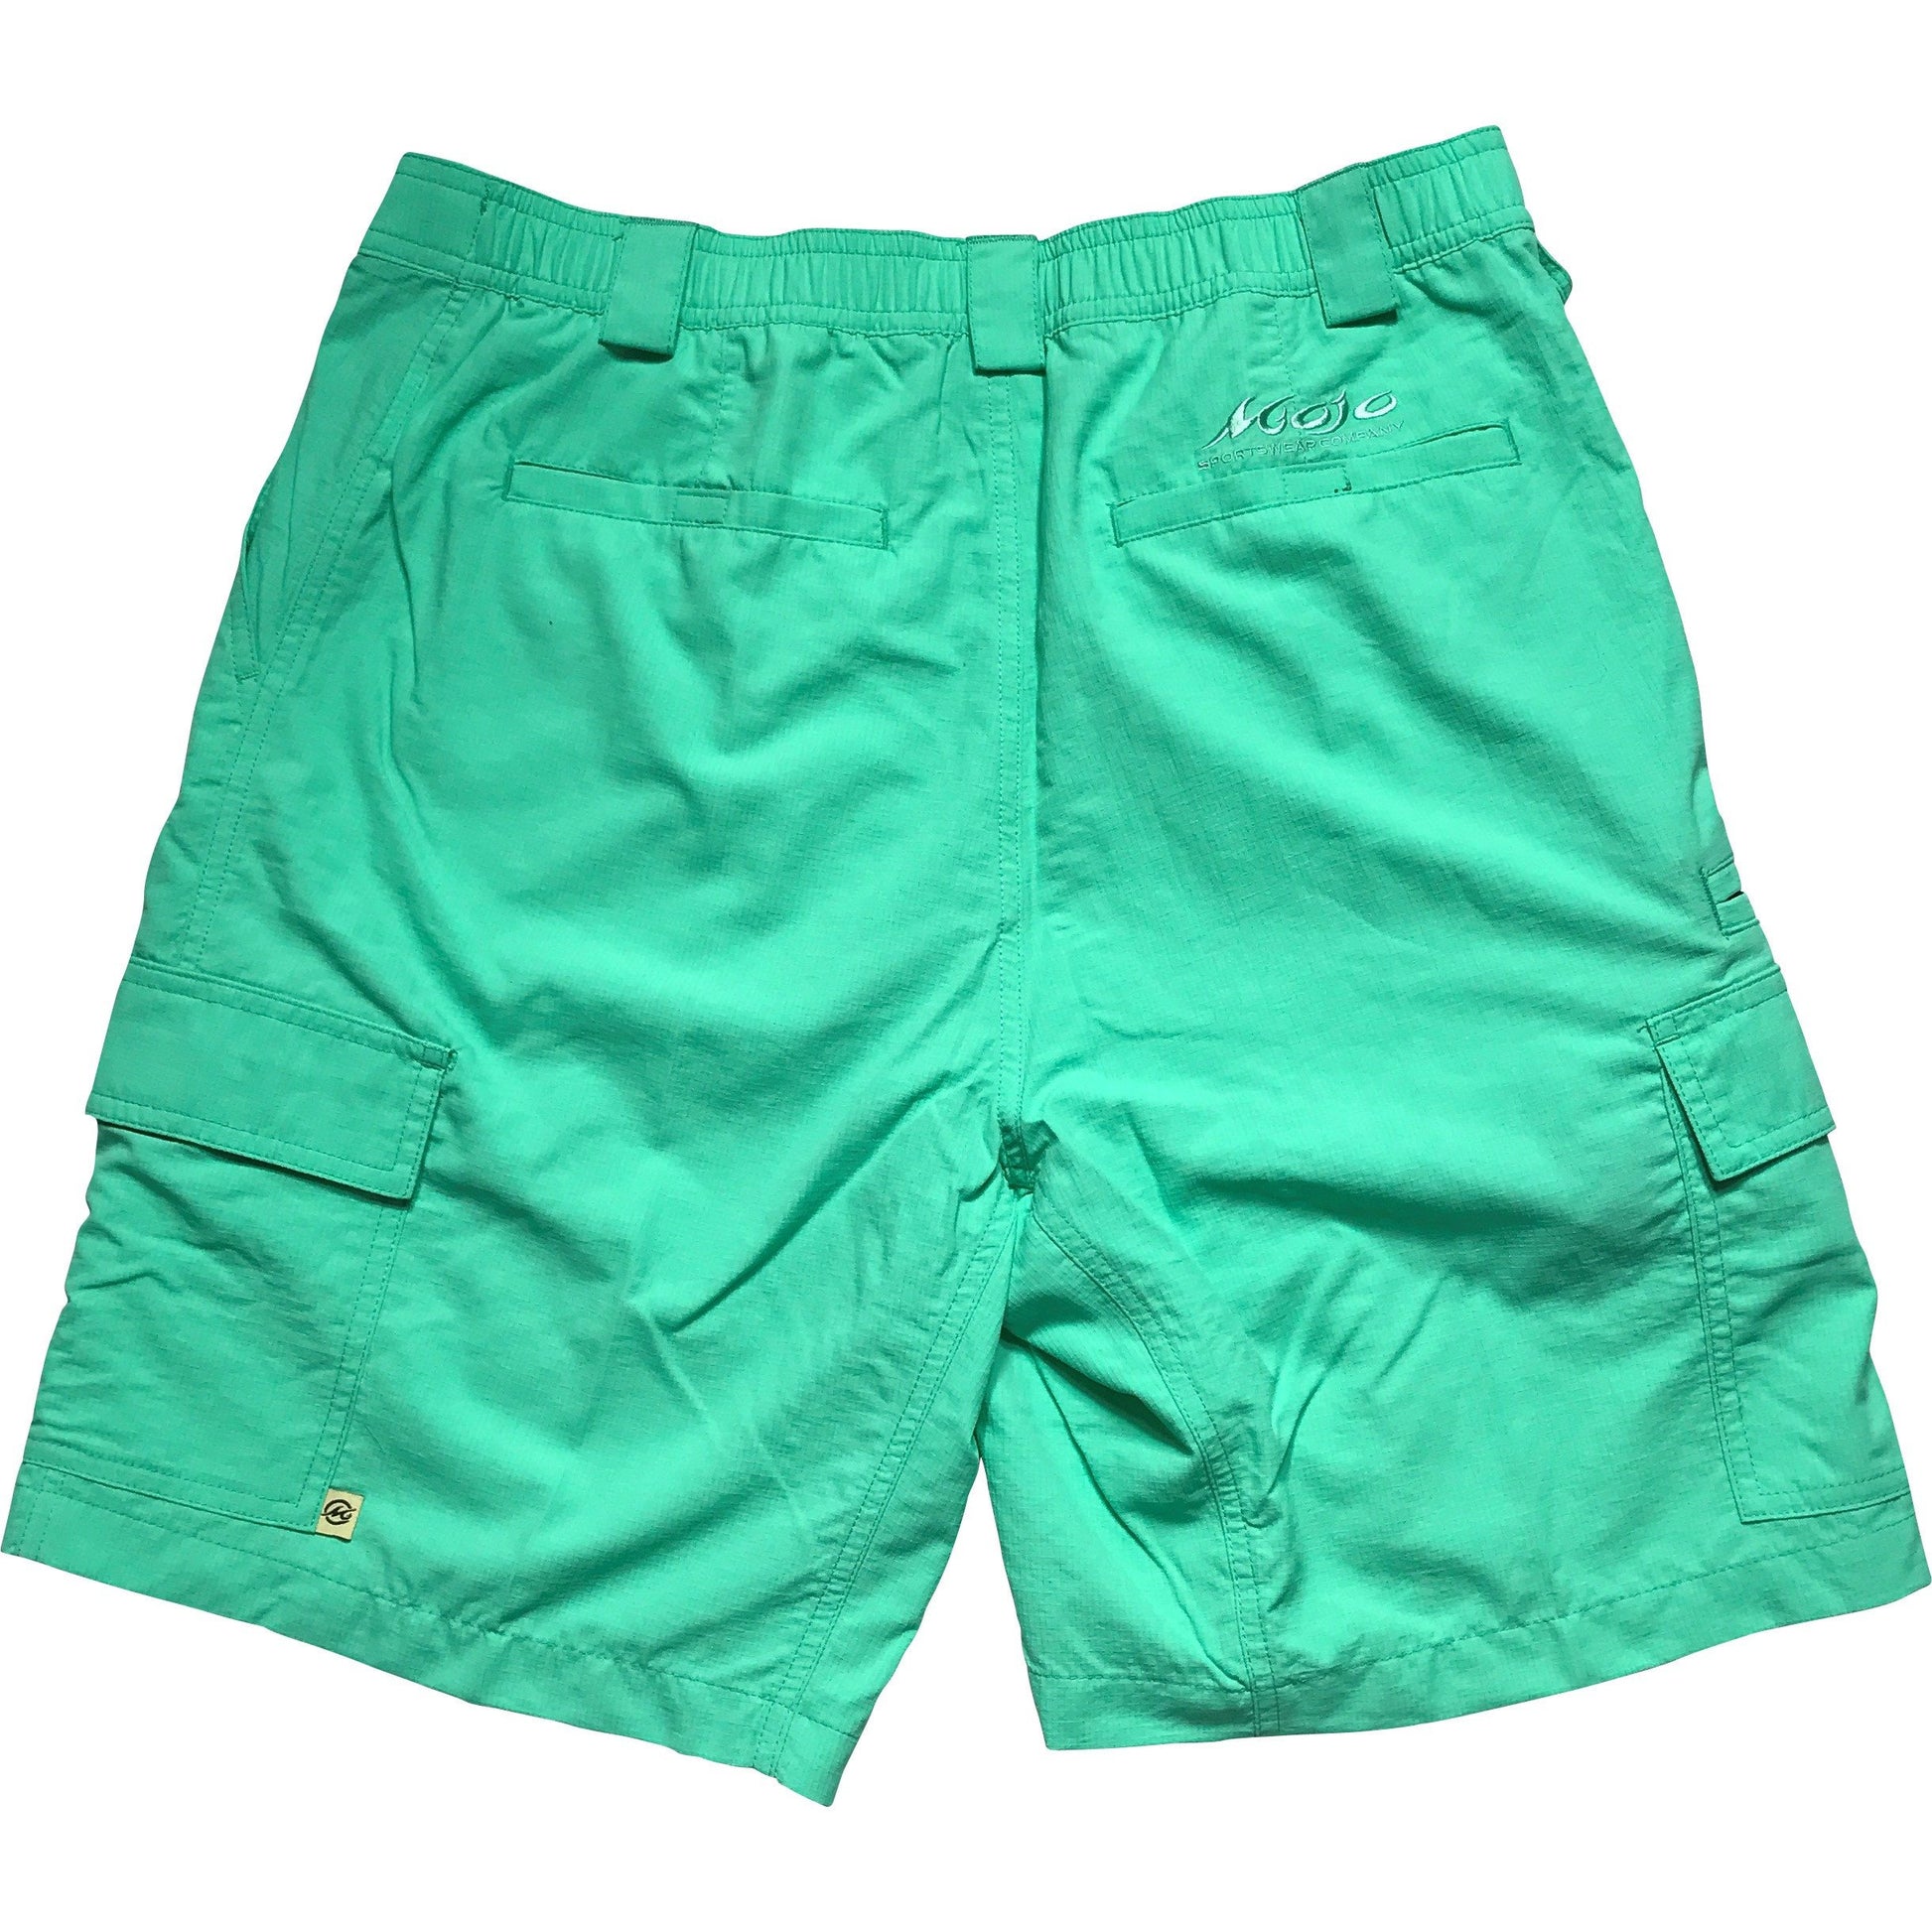 STILLWATER FISHING SHORT - Mojo Sportswear Company